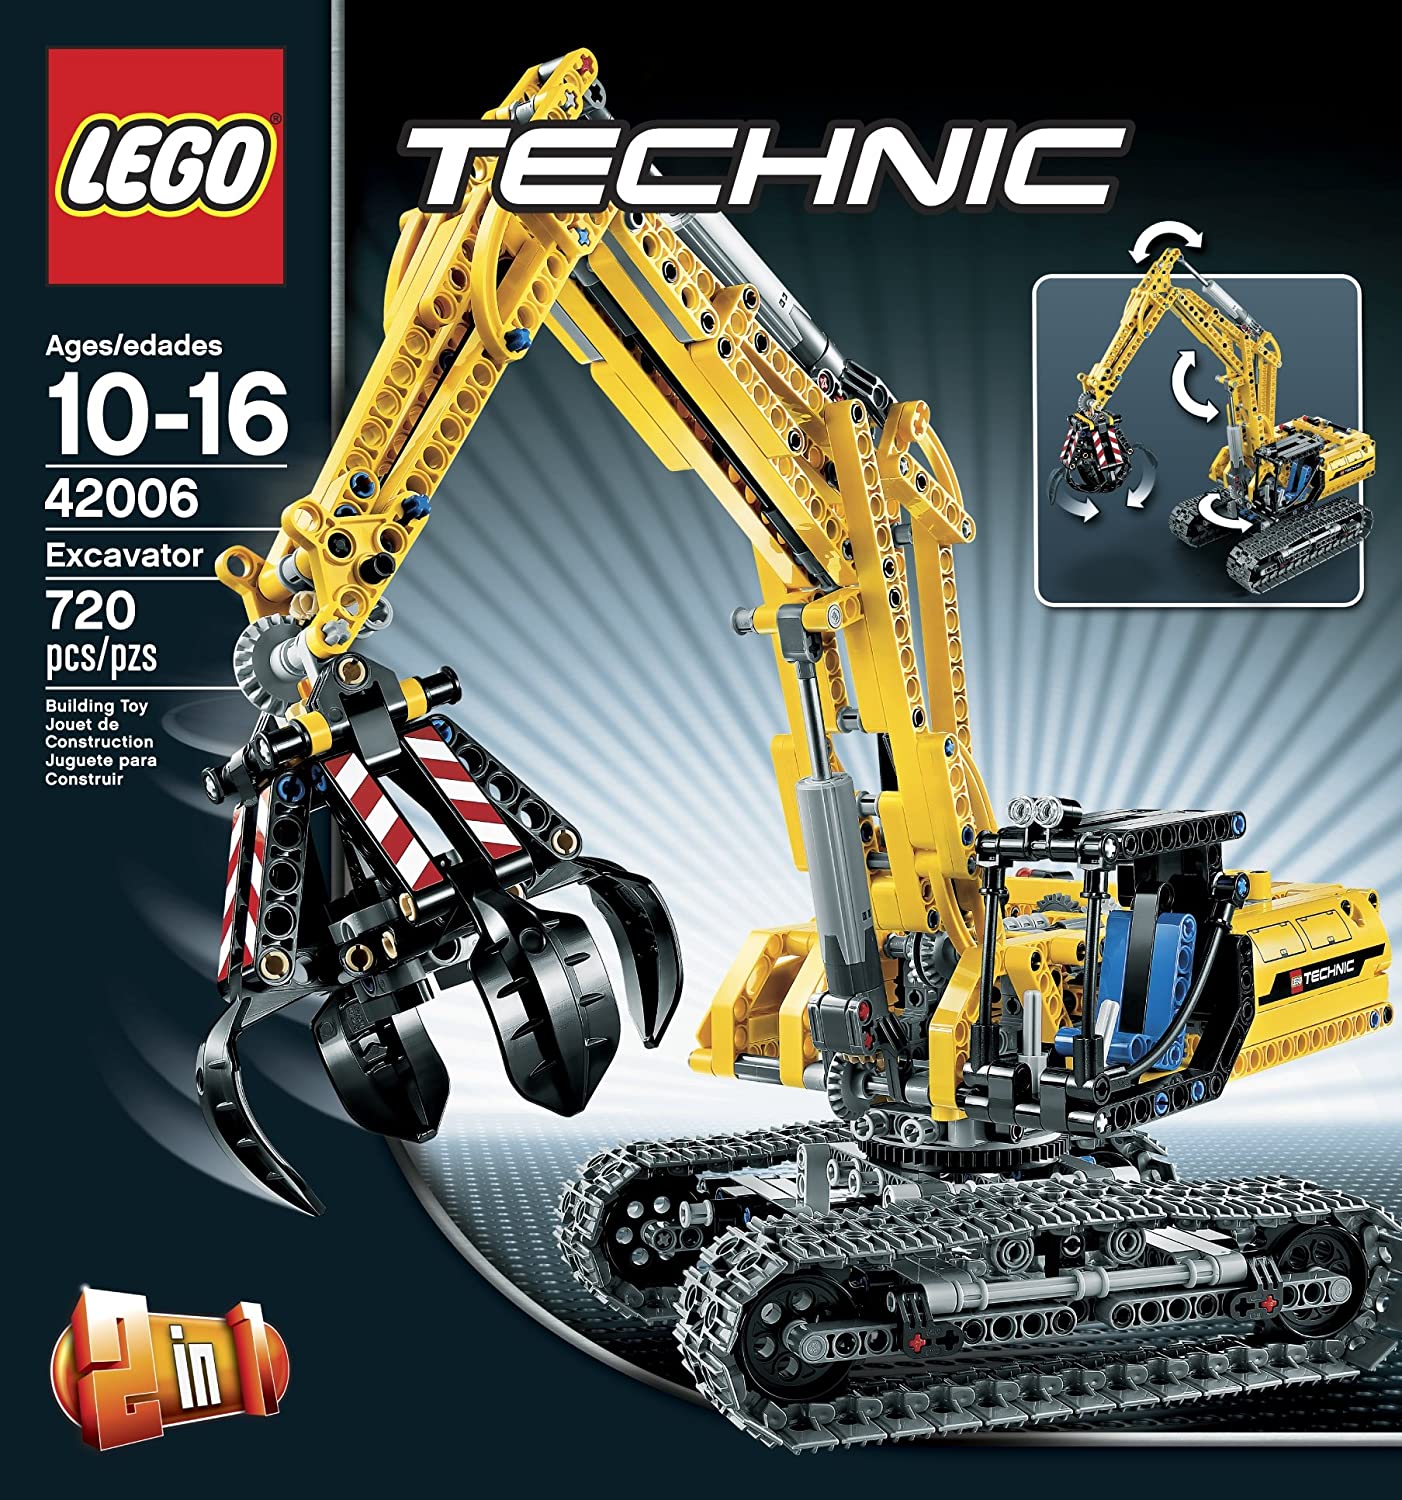 LEGO Technic 42006 Excavator - image 3 of 5